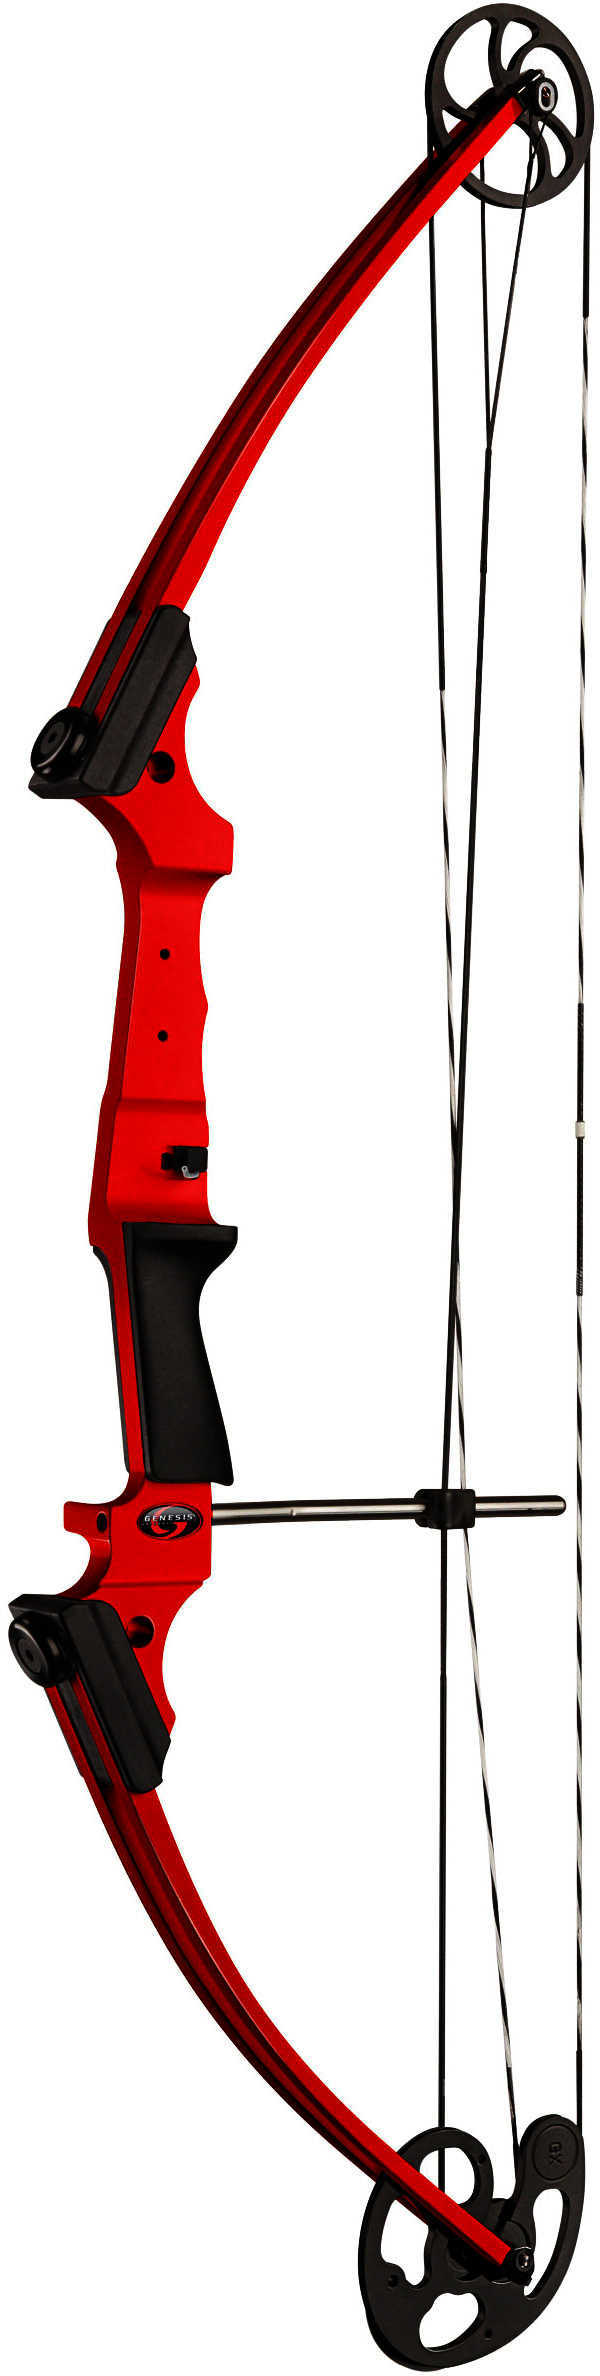 Genesis Bow Red LH Model: 10475